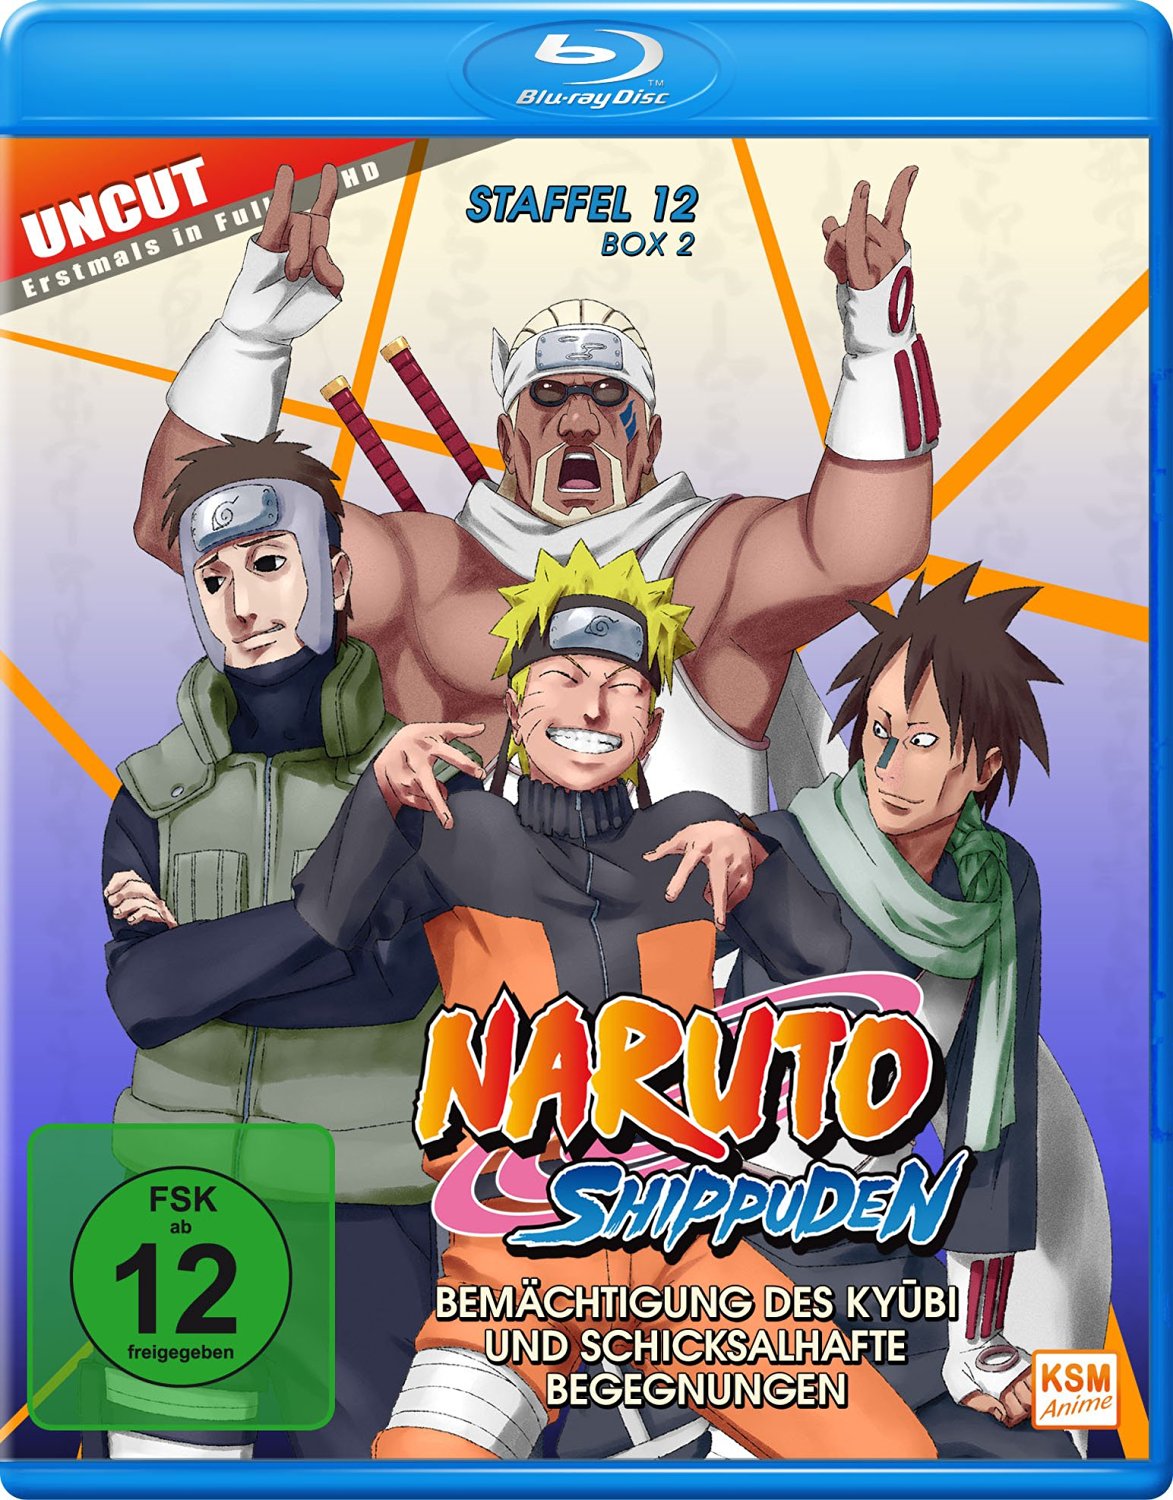 Naruto Shippuden - Staffel 12 Box 2: Episode 481-495 (uncut) Blu-ray Cover